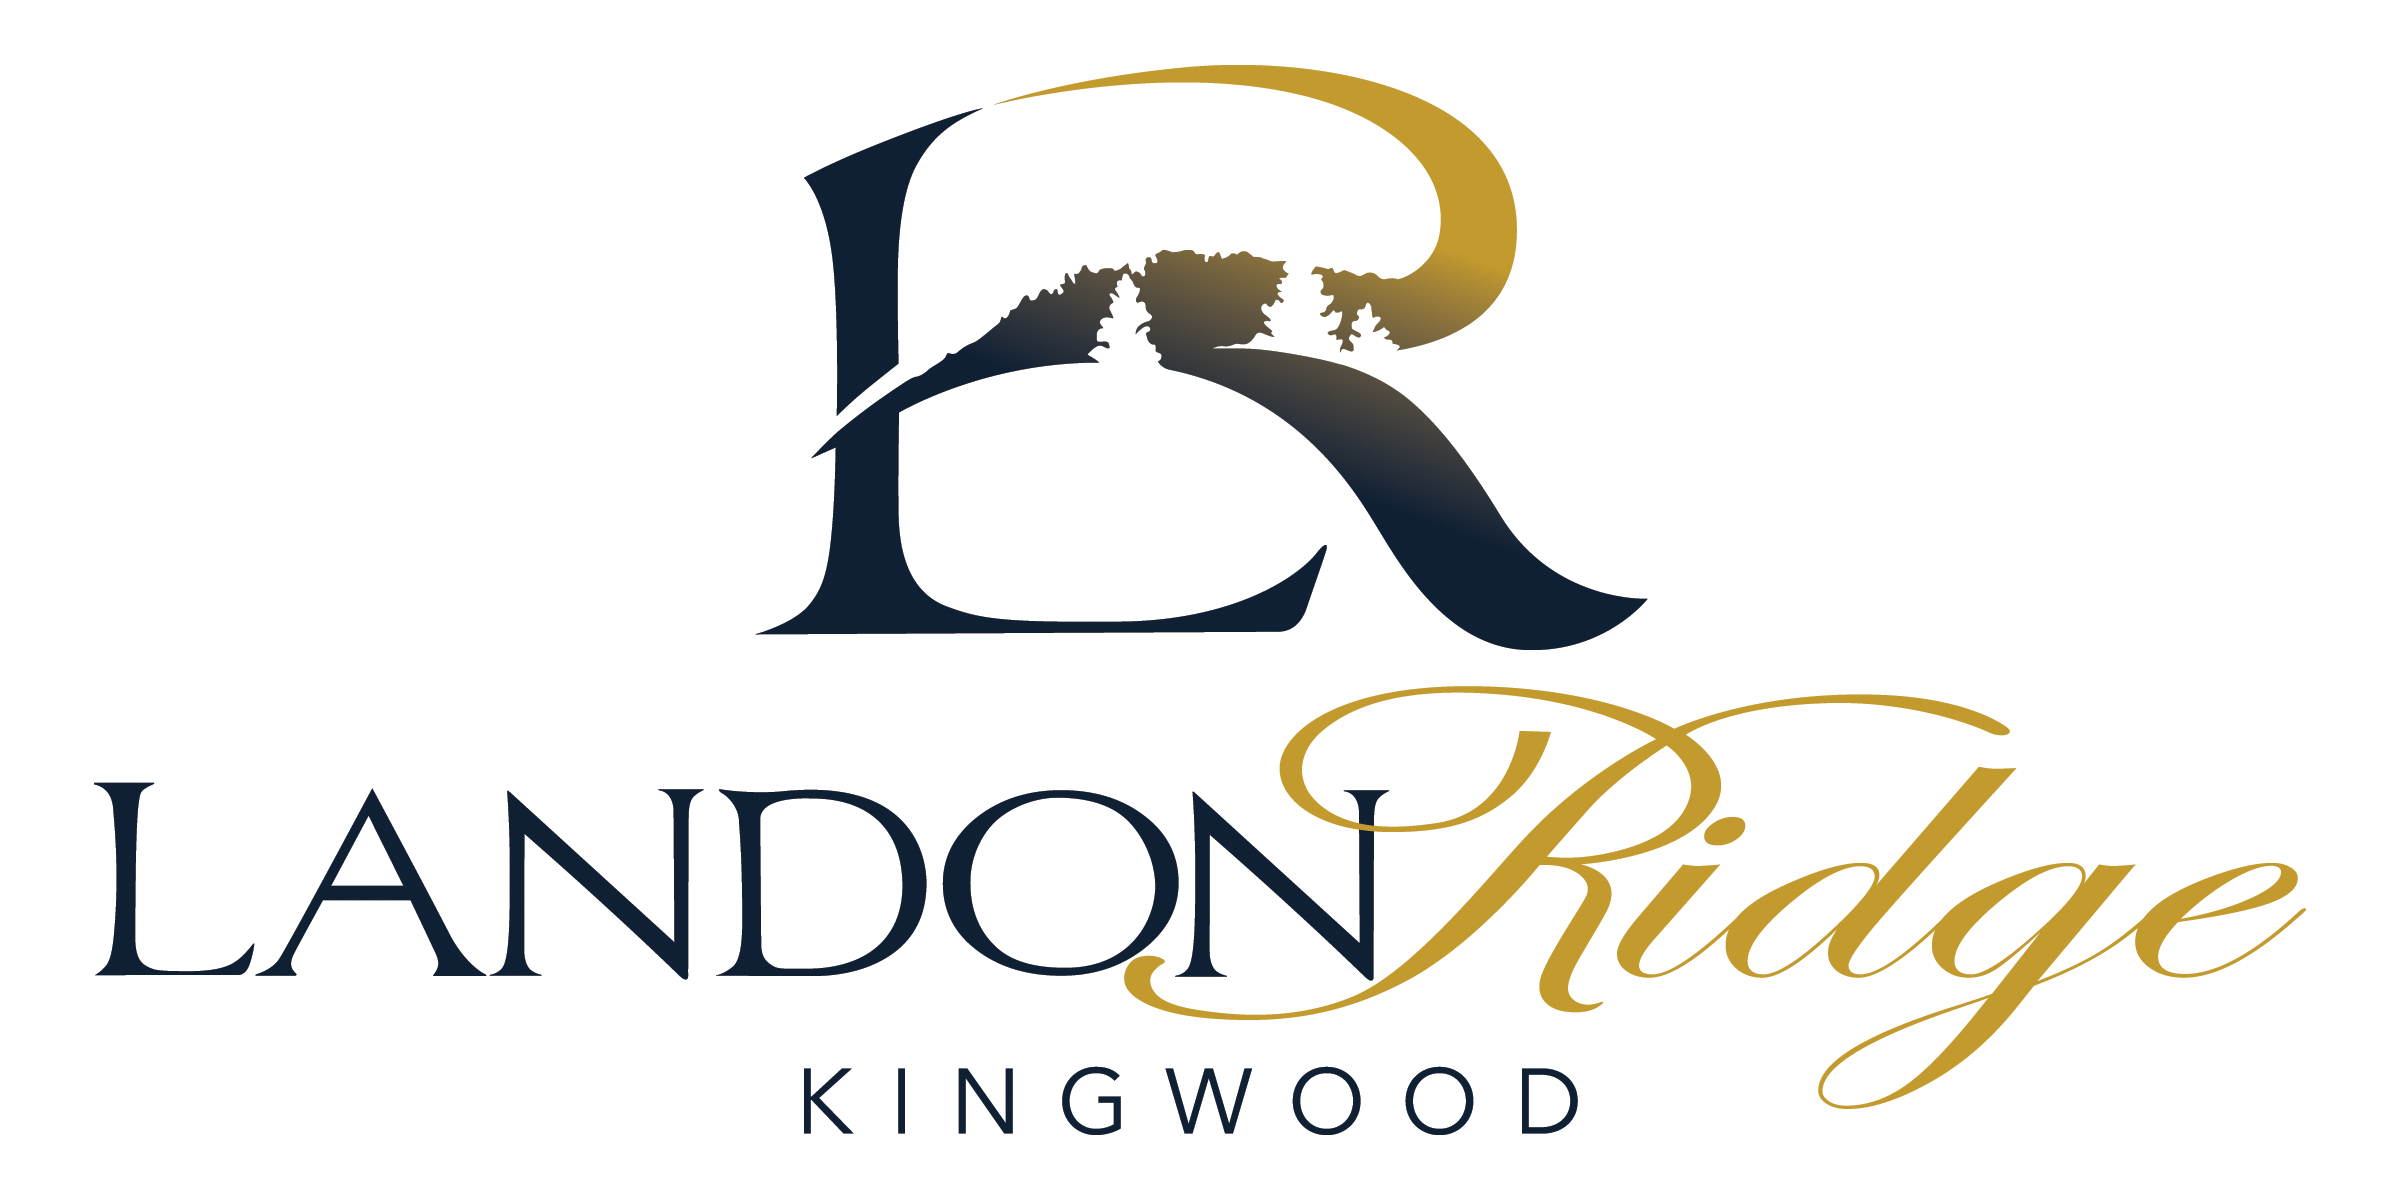 Landon Ridge - Kingwood logo